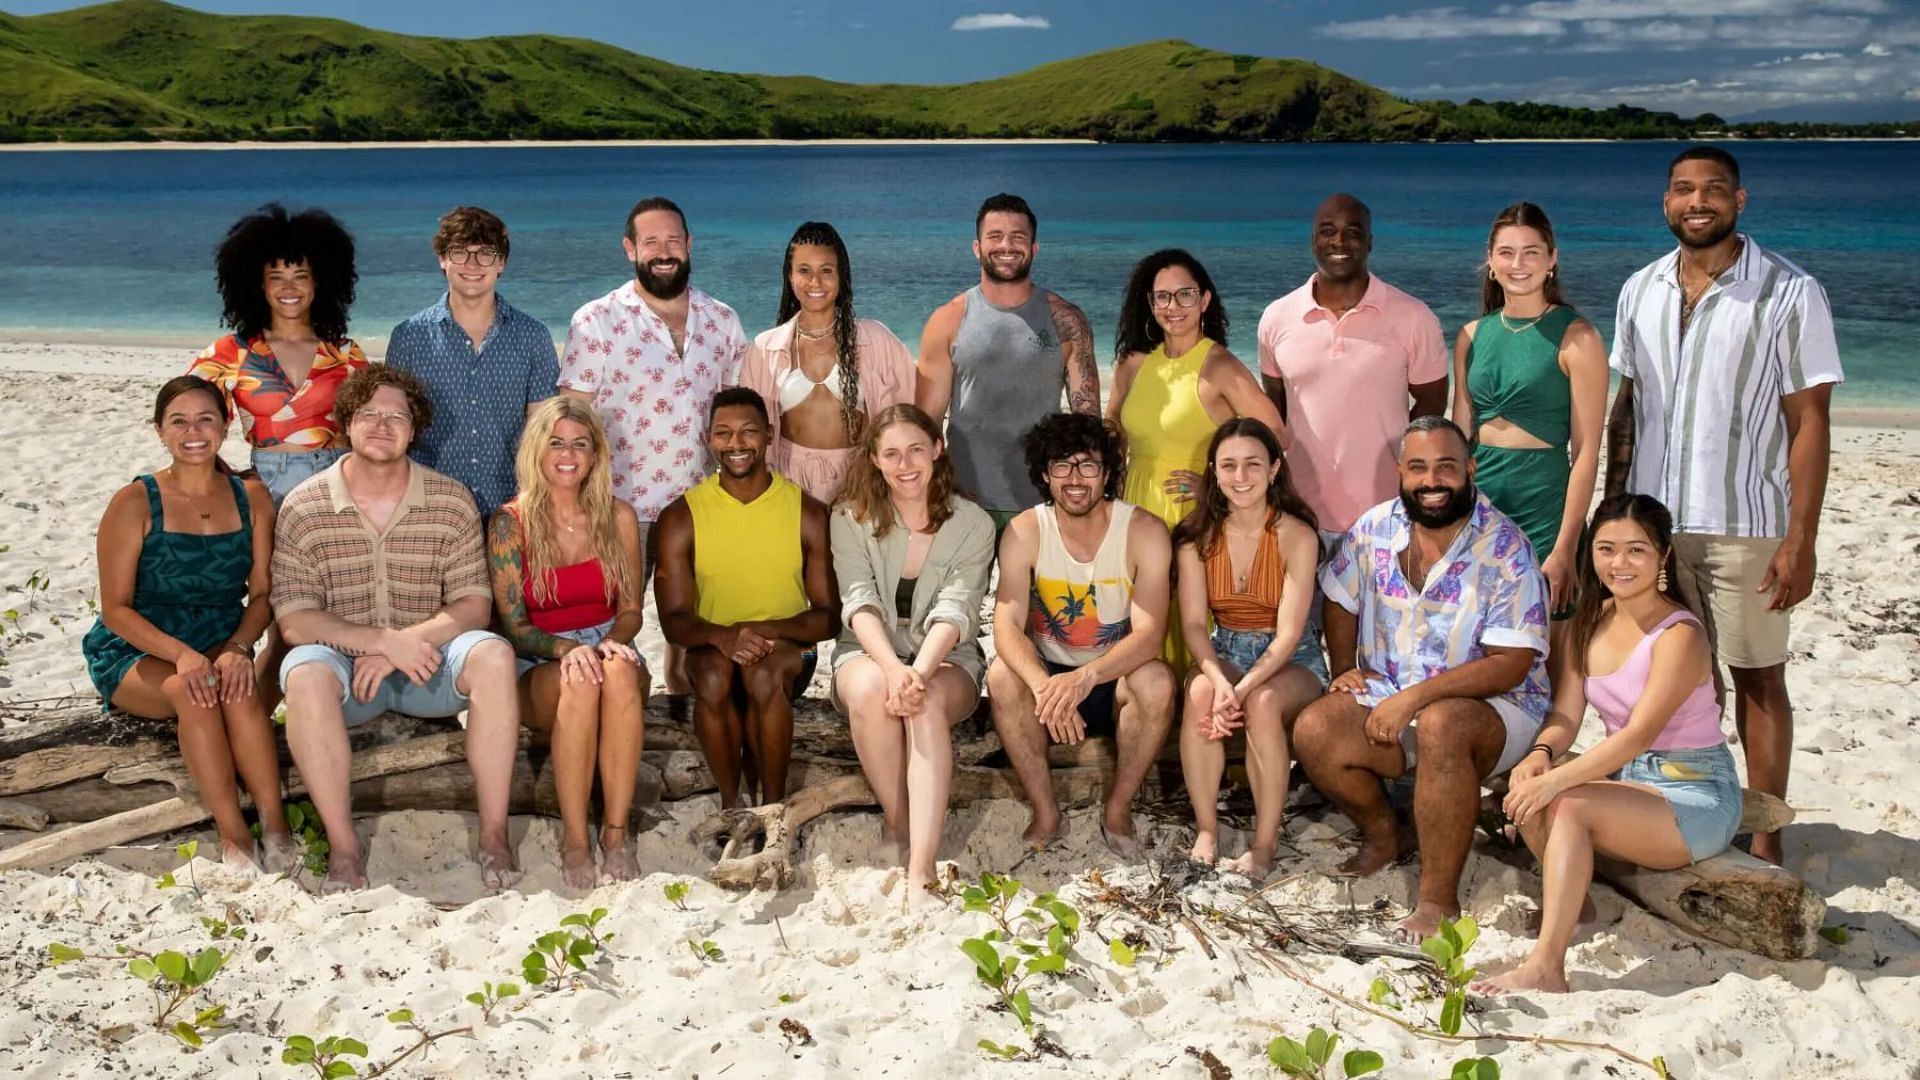 Survivor season 44 will see a diverse cast